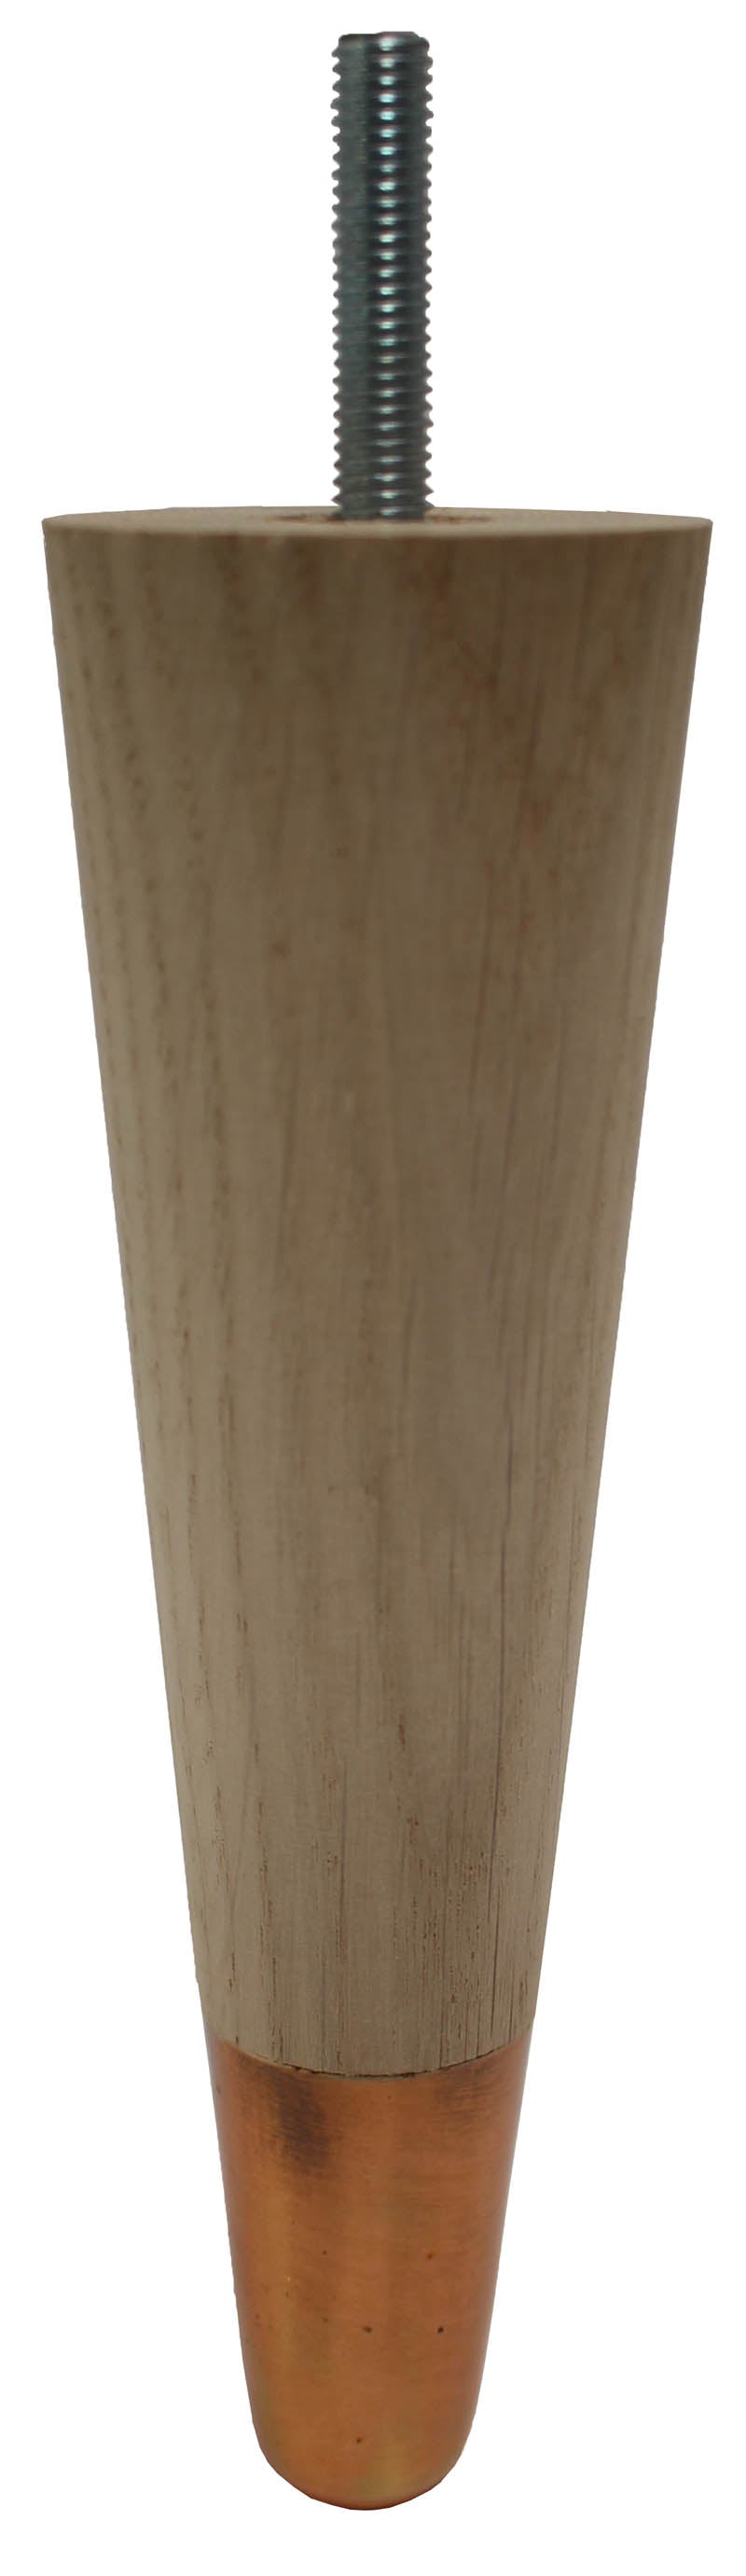 Carin Solid Oak Tapered Furniture Legs - Raw Finish - Oiled Bronze Slipper Cups - Set of 4